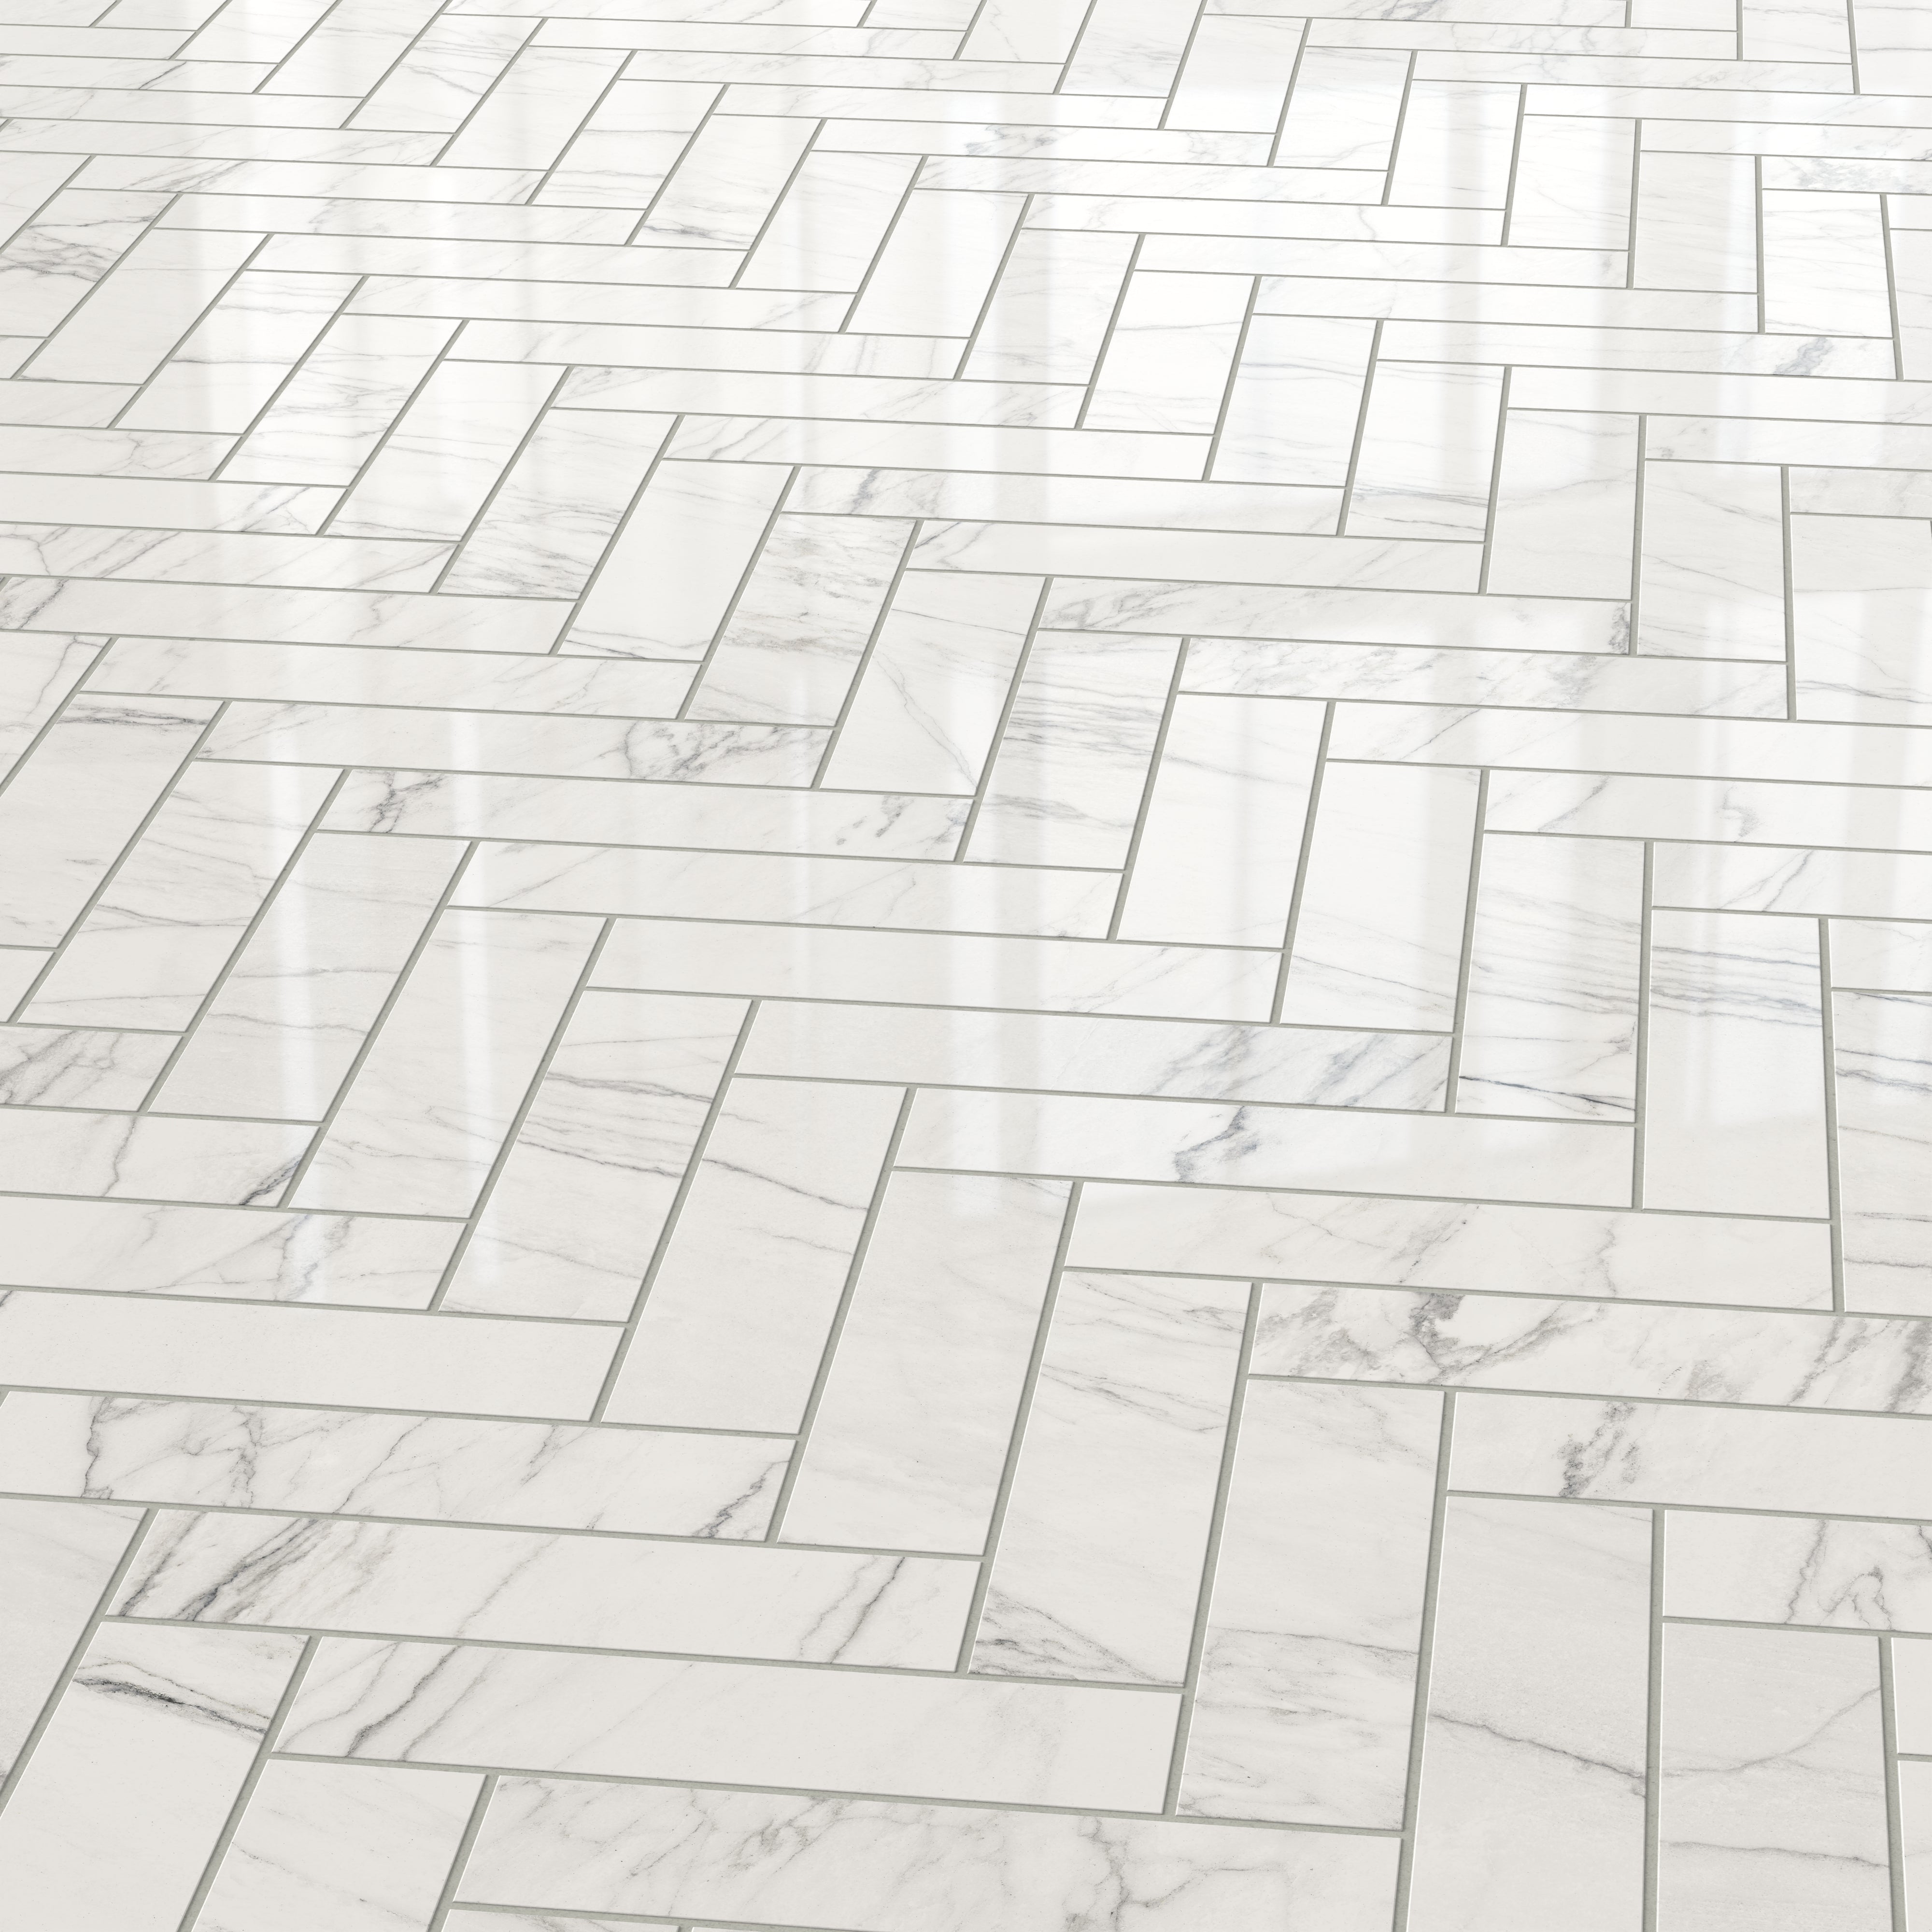 Aniston 3x12 Polished Porcelain Tile in Calacatta Quarzite